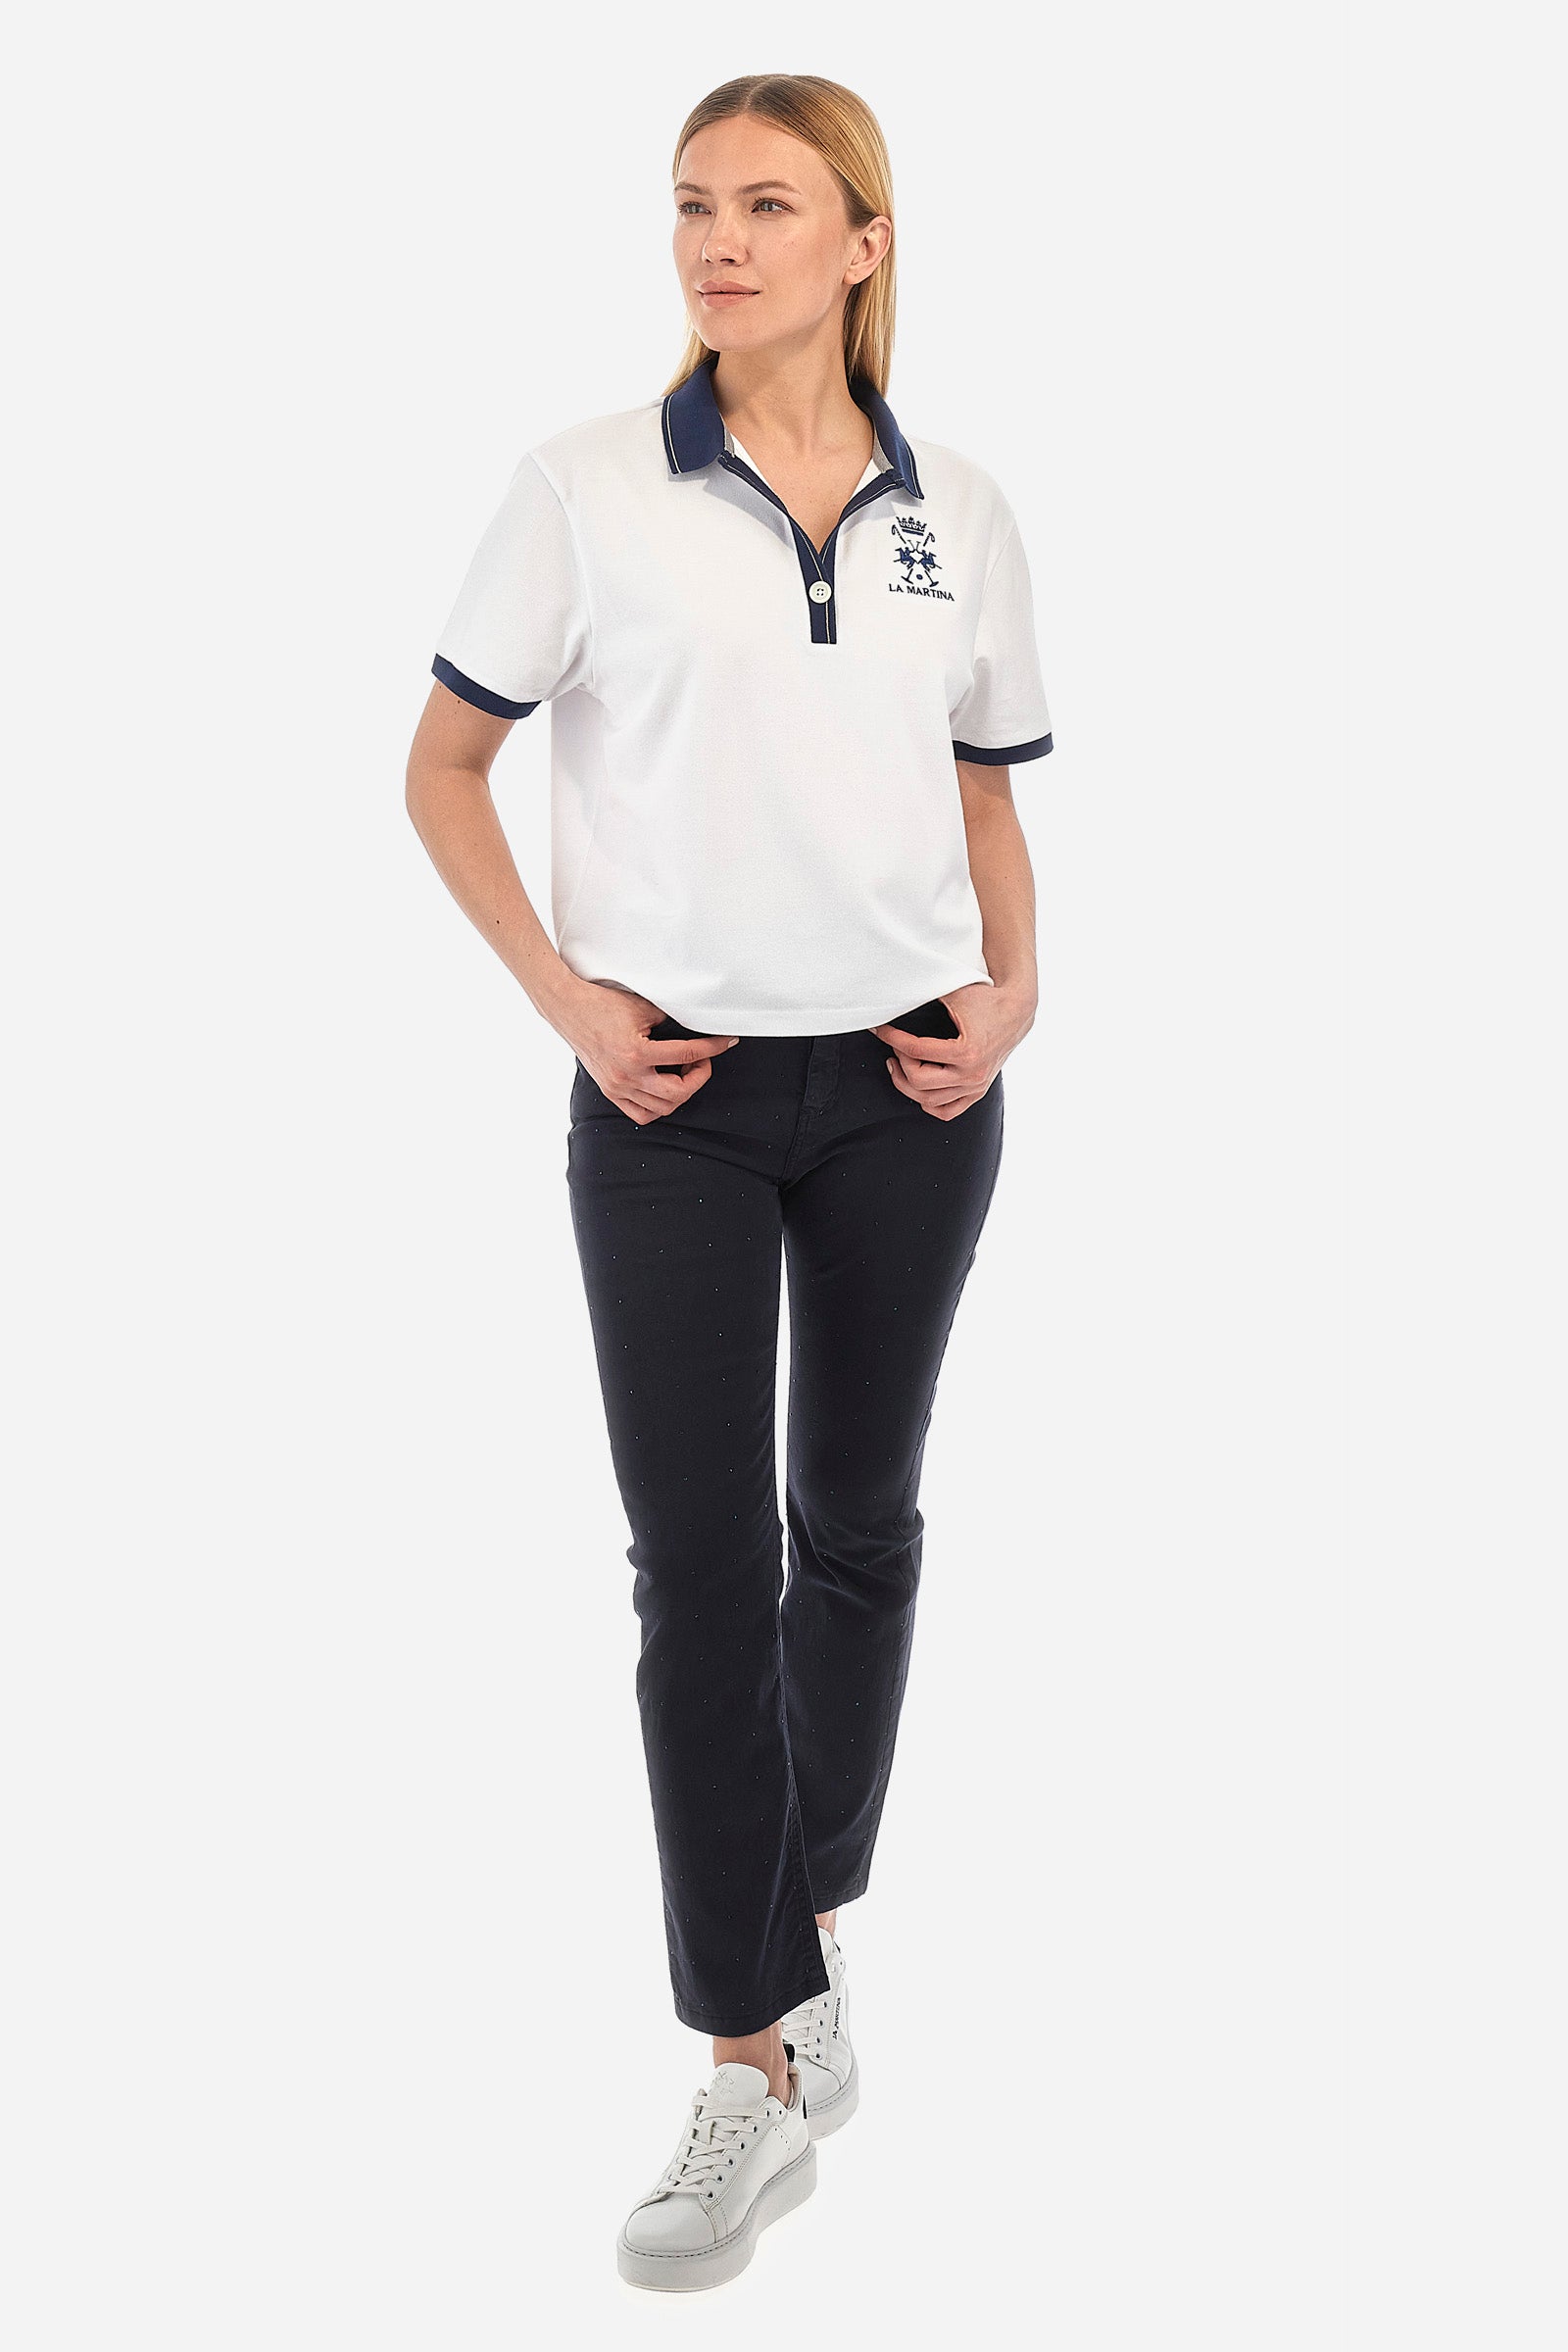 Damen-Poloshirt Regular Fit - Yaayaa